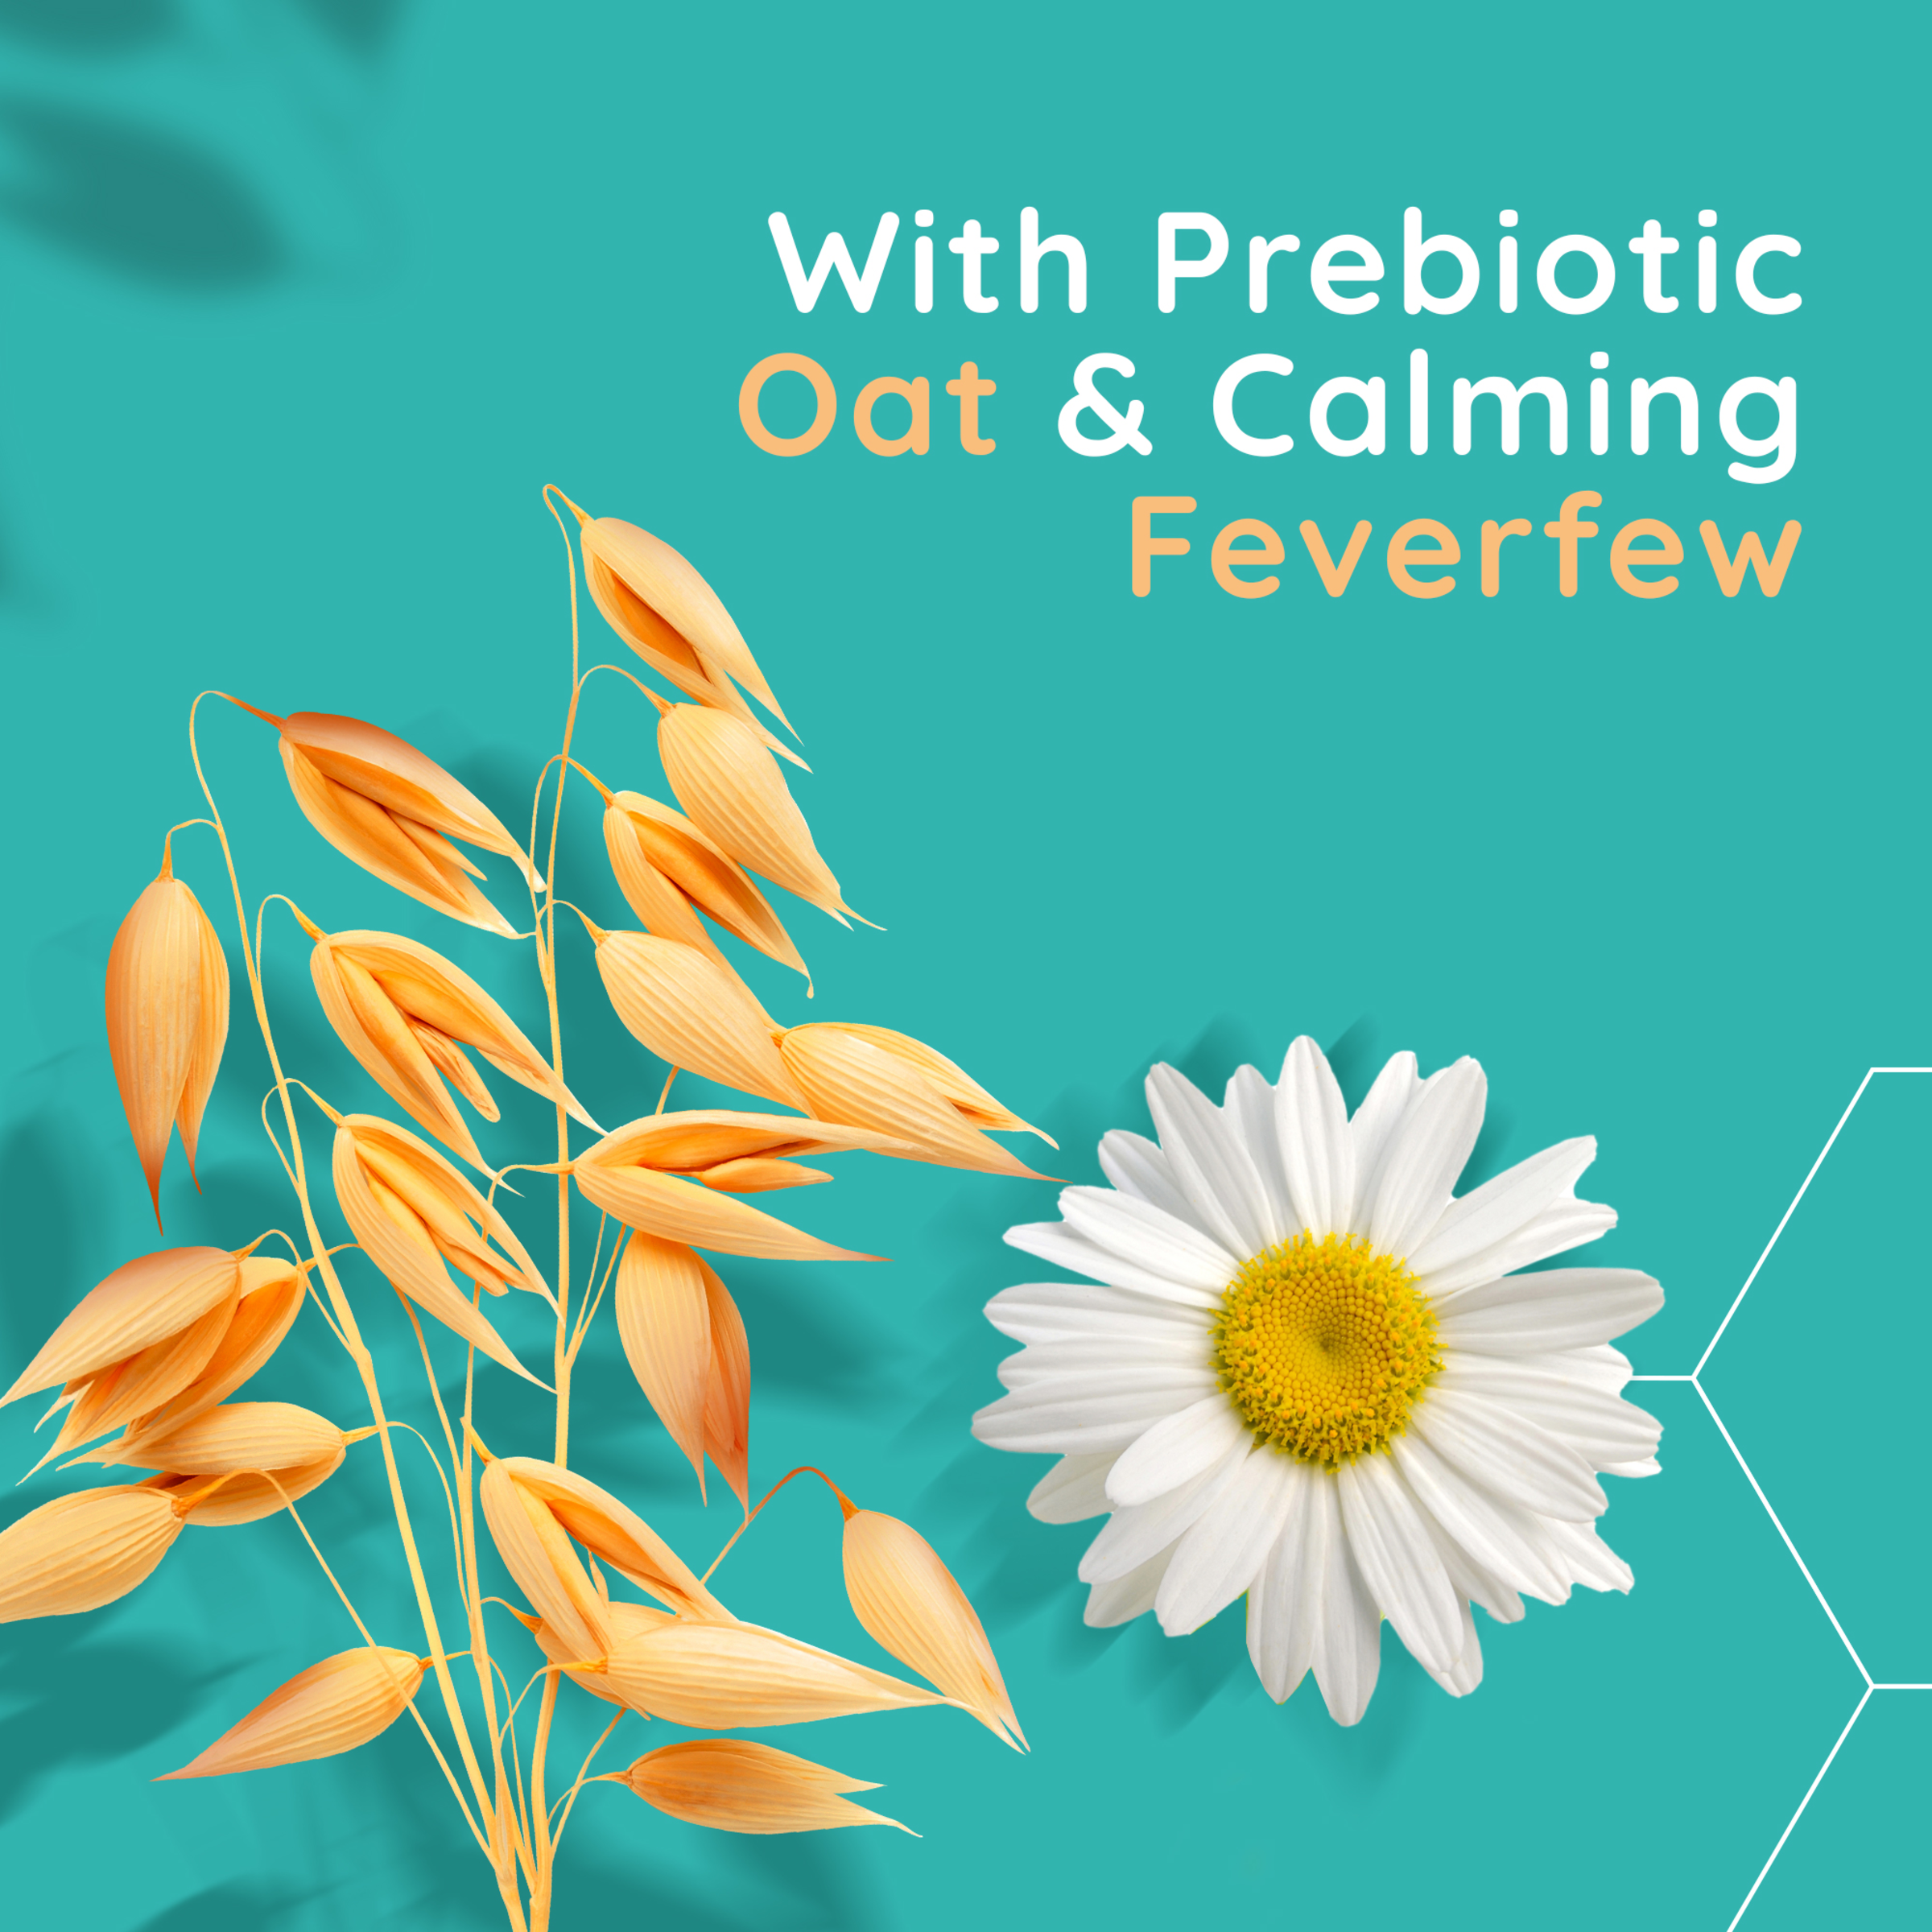 with prebiotic oat & calming feverfew